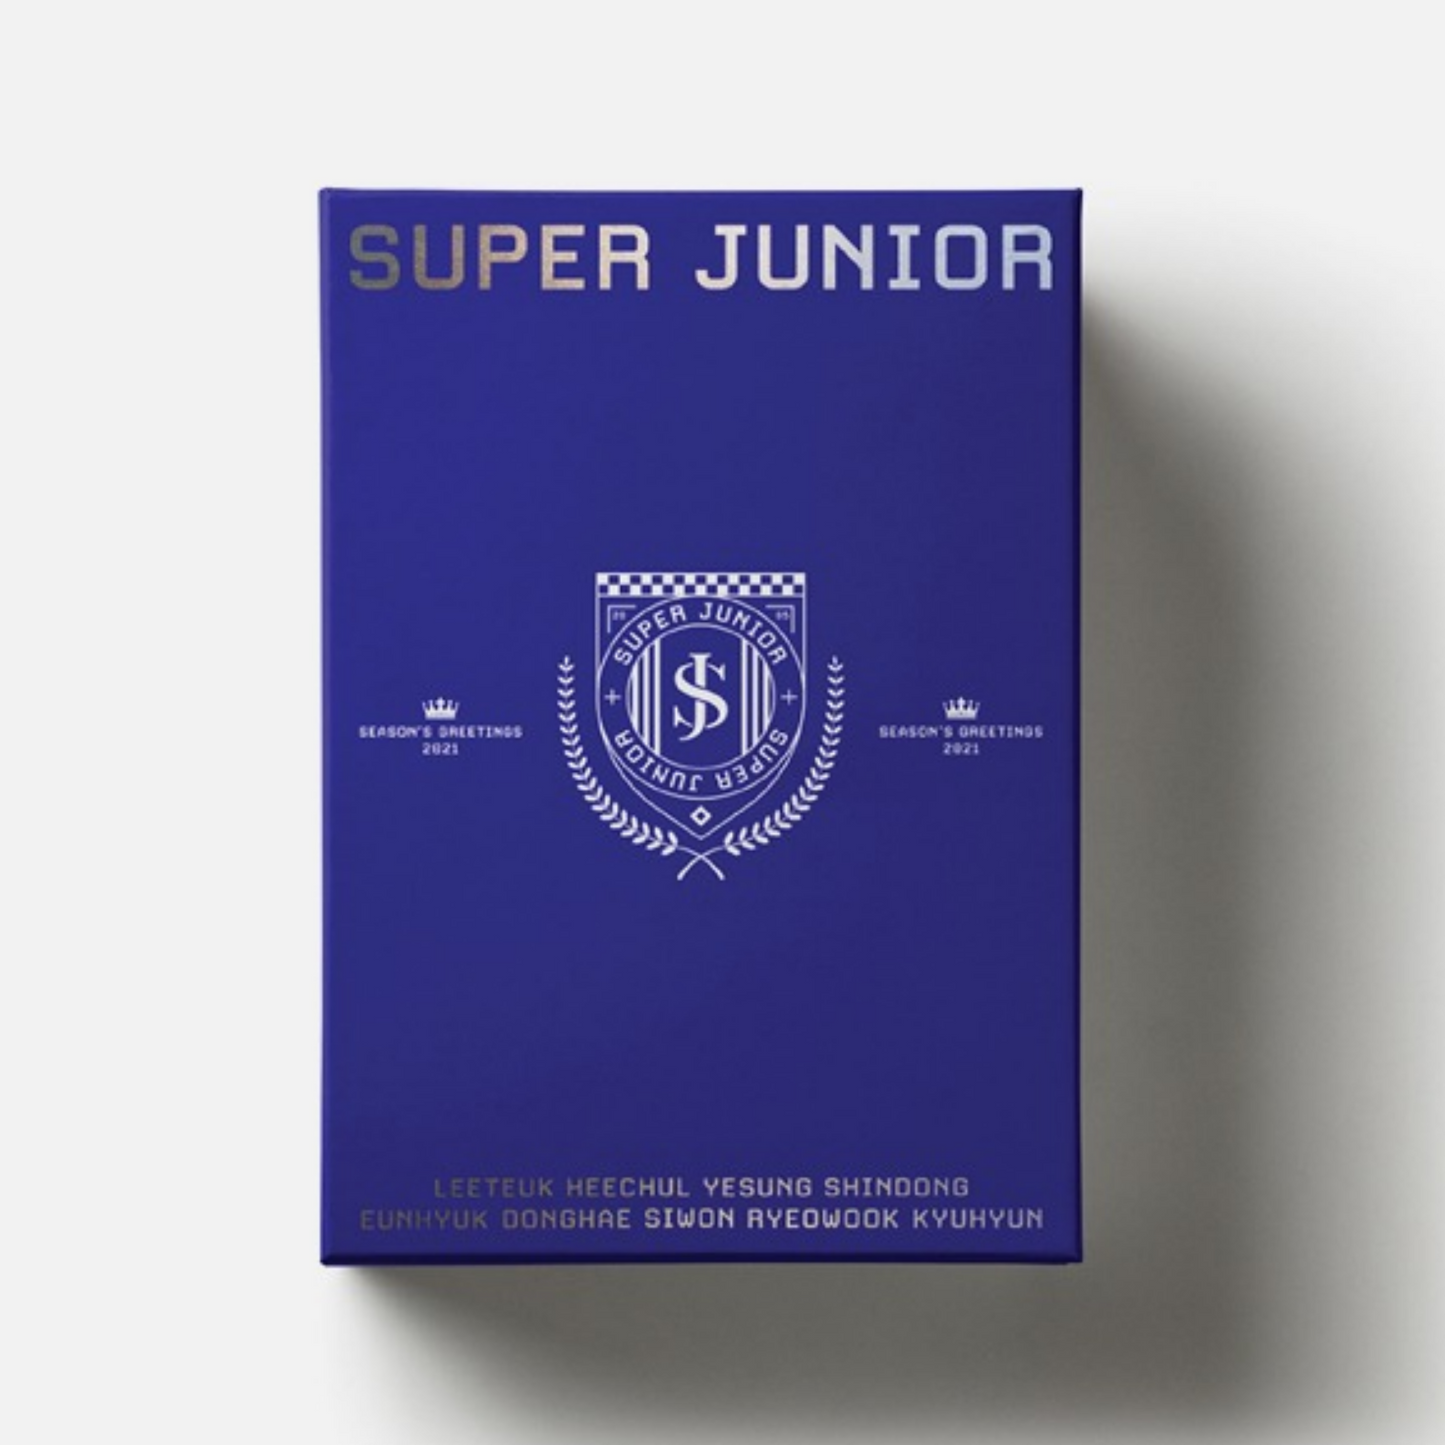 SUPER JUNIOR  - SEASON GREETINGS 2021 تحية الموسم لفرقة سوبر جونير